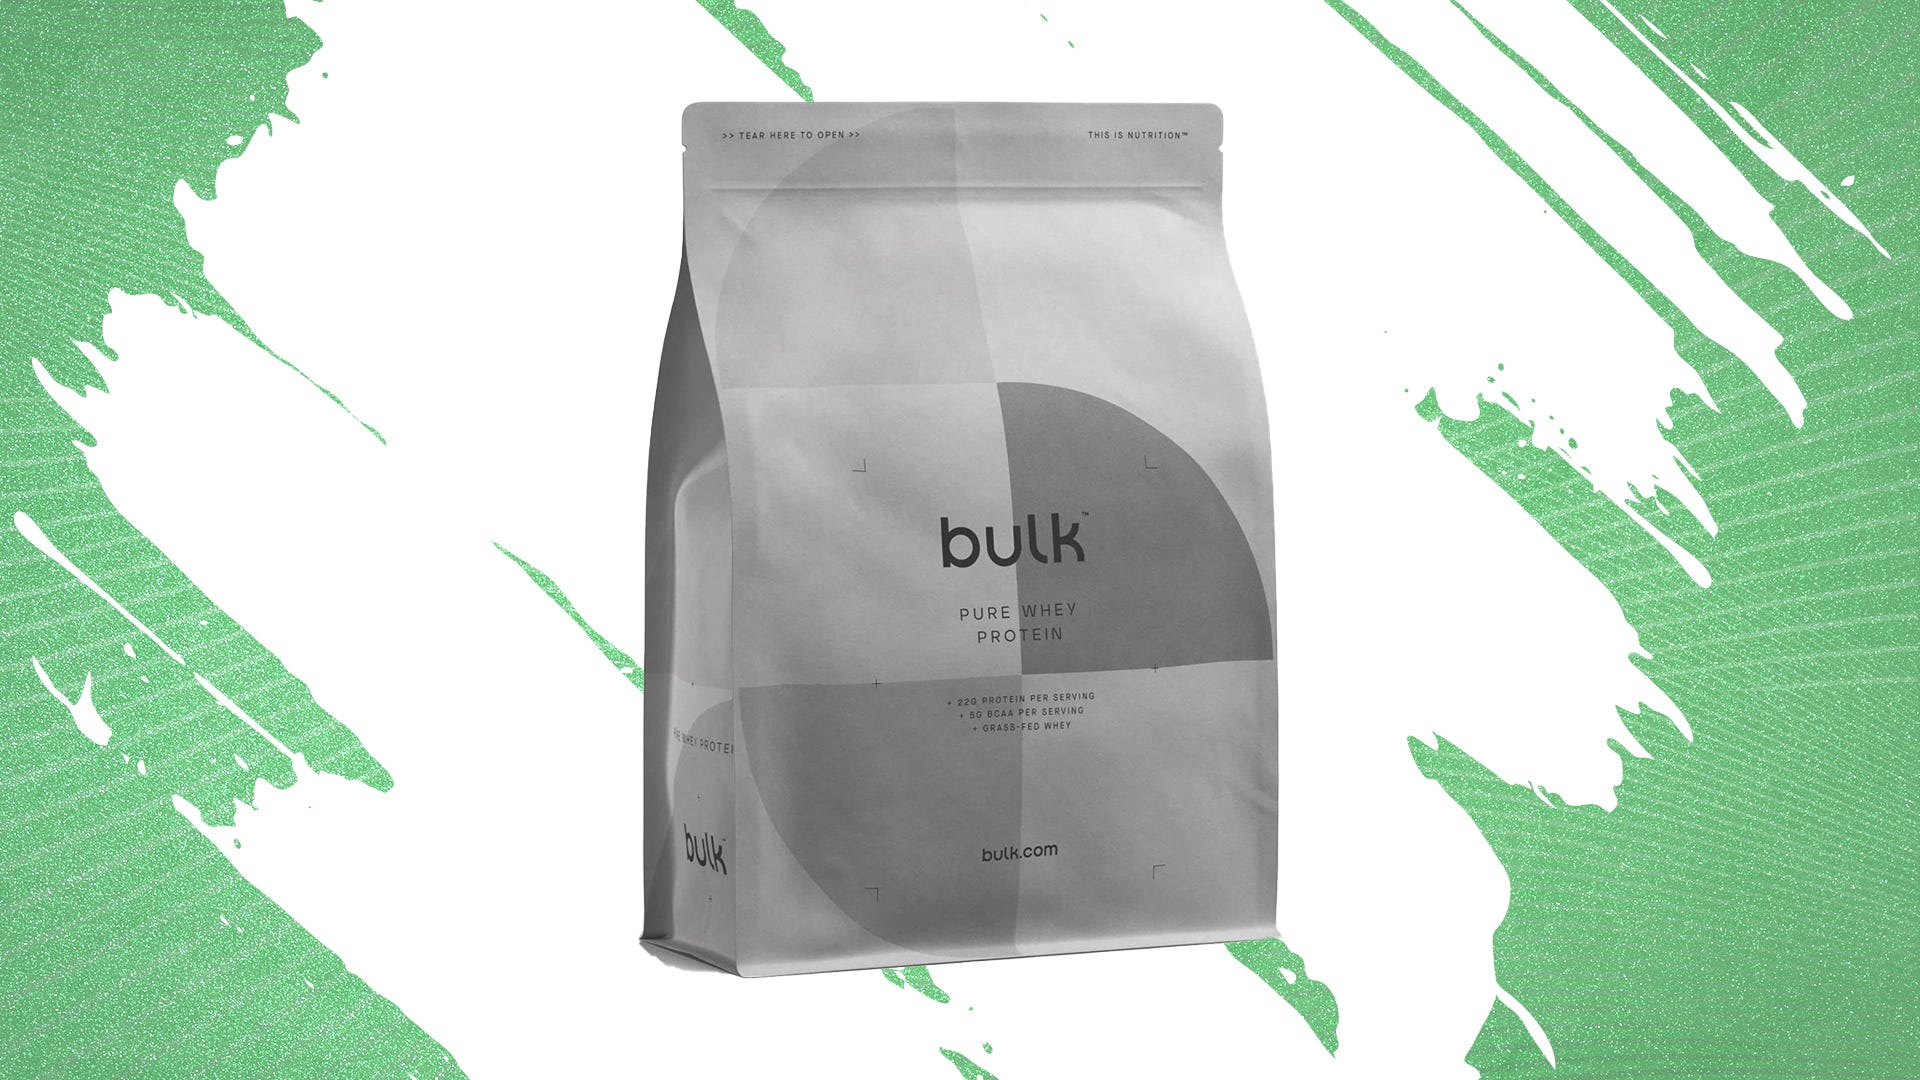 Bulk pure whey protein powder (1 kg)